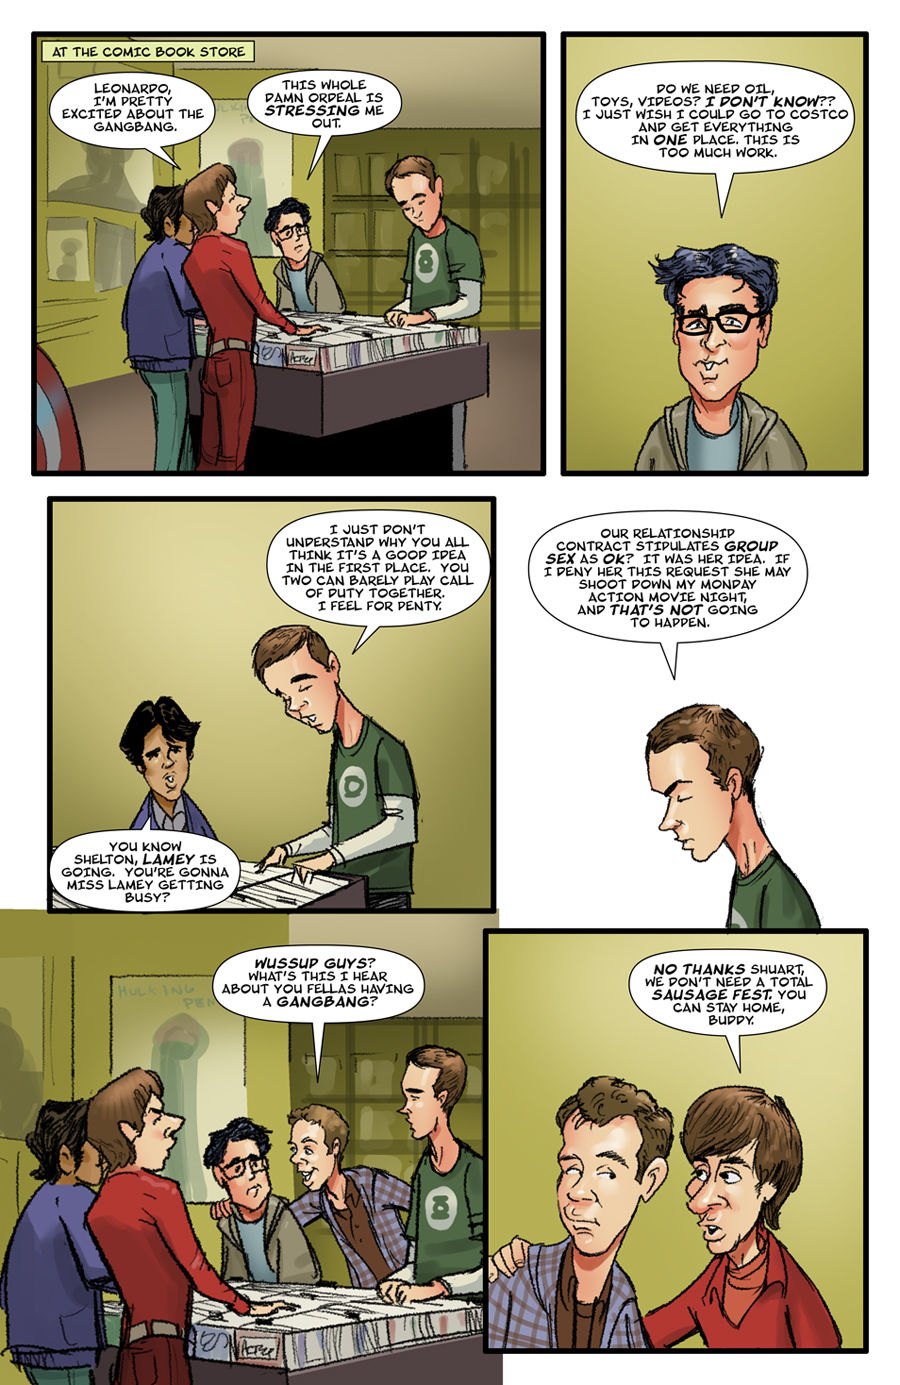 The Big Gang Bang Theory â€“ Moose - Comics Army